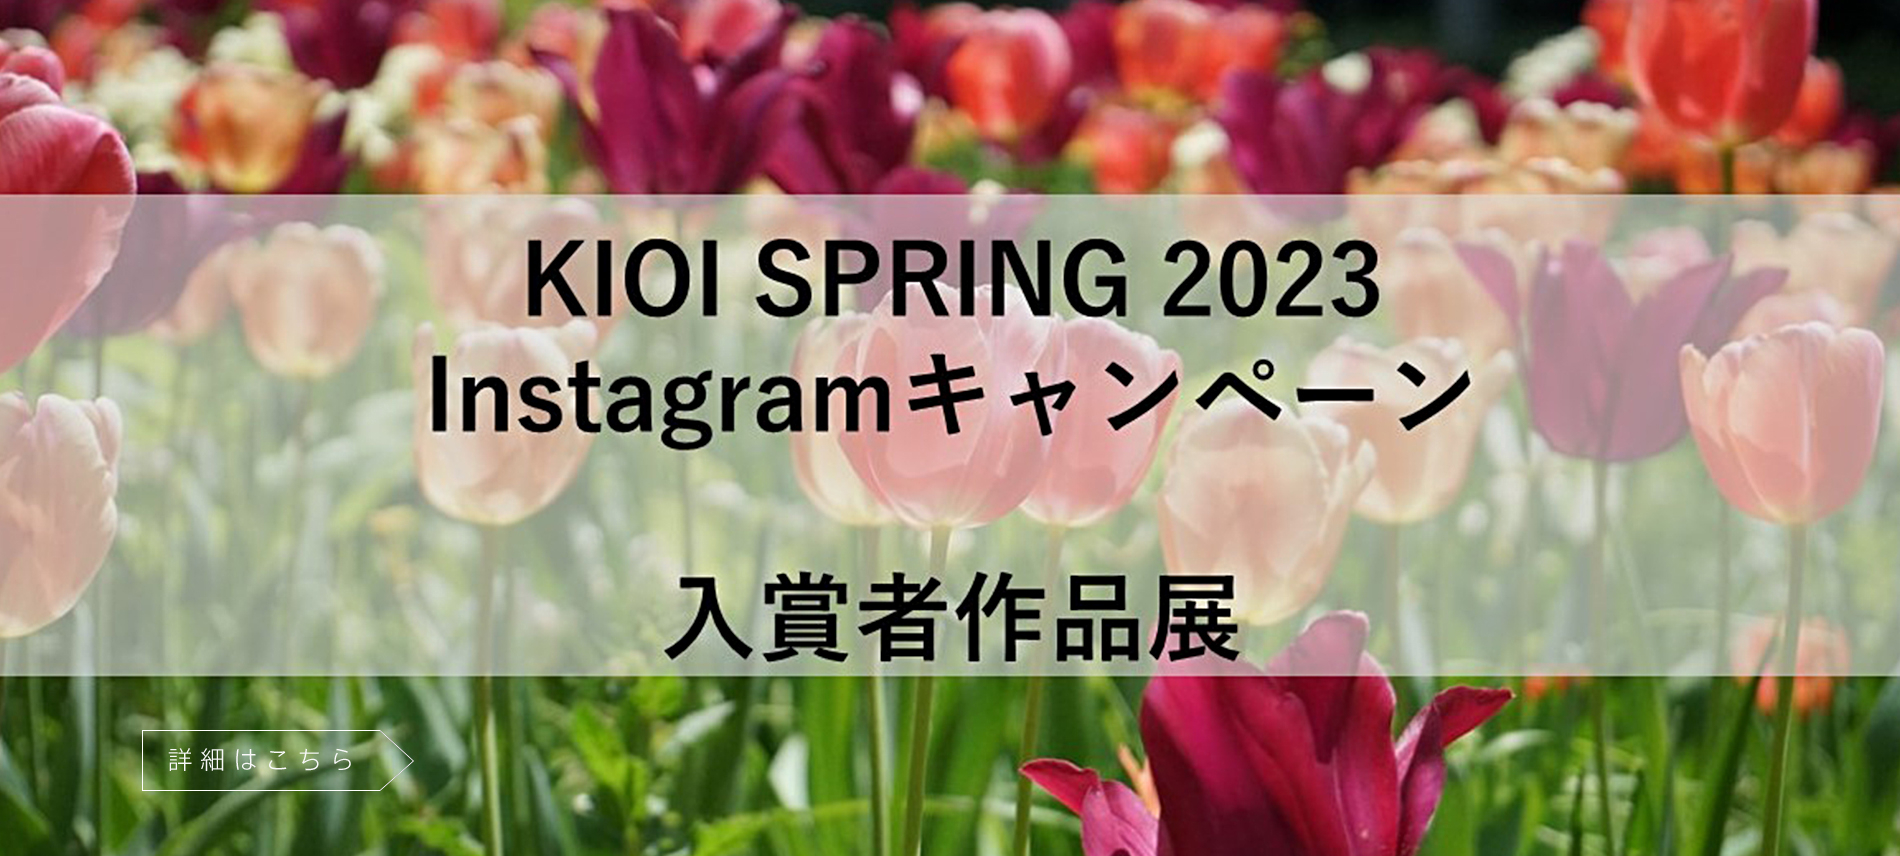 KIOI SPRING 2023 Instagramキャンペーン 入賞者作品展